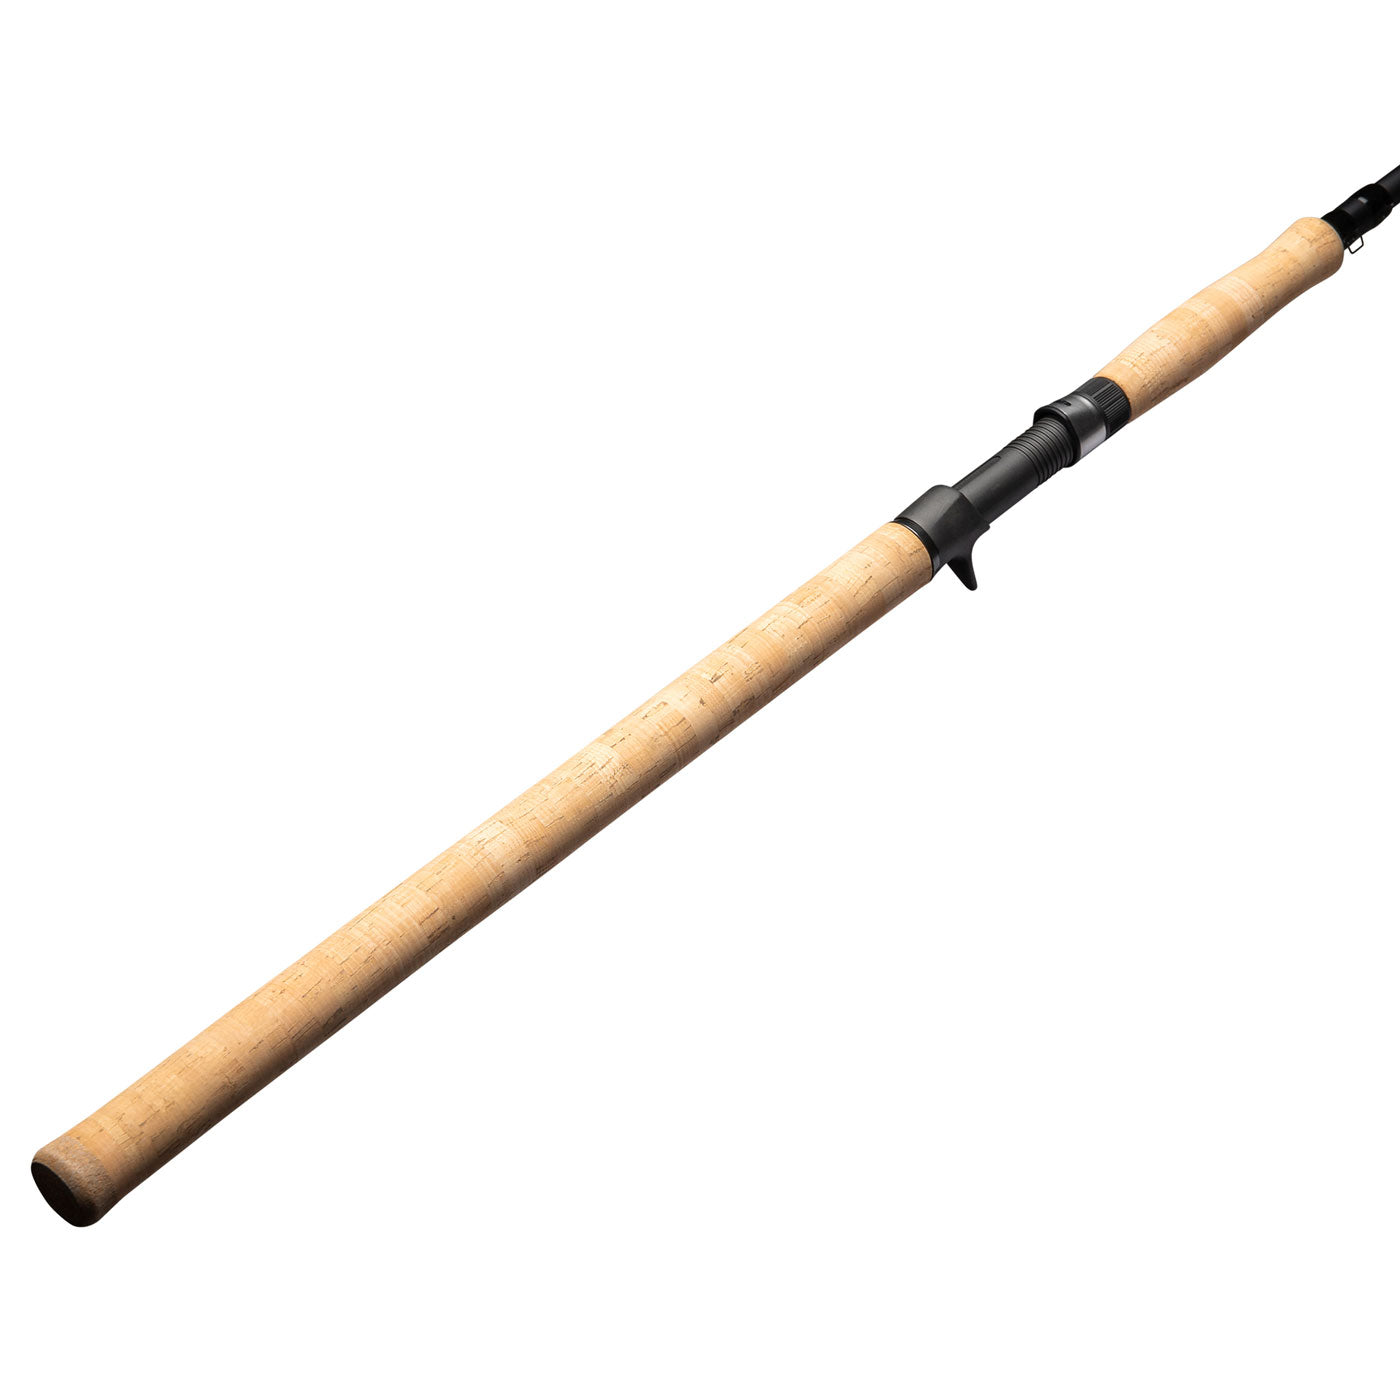  Tiandirenhe Adjustable Retractable Carp Fishing Rod